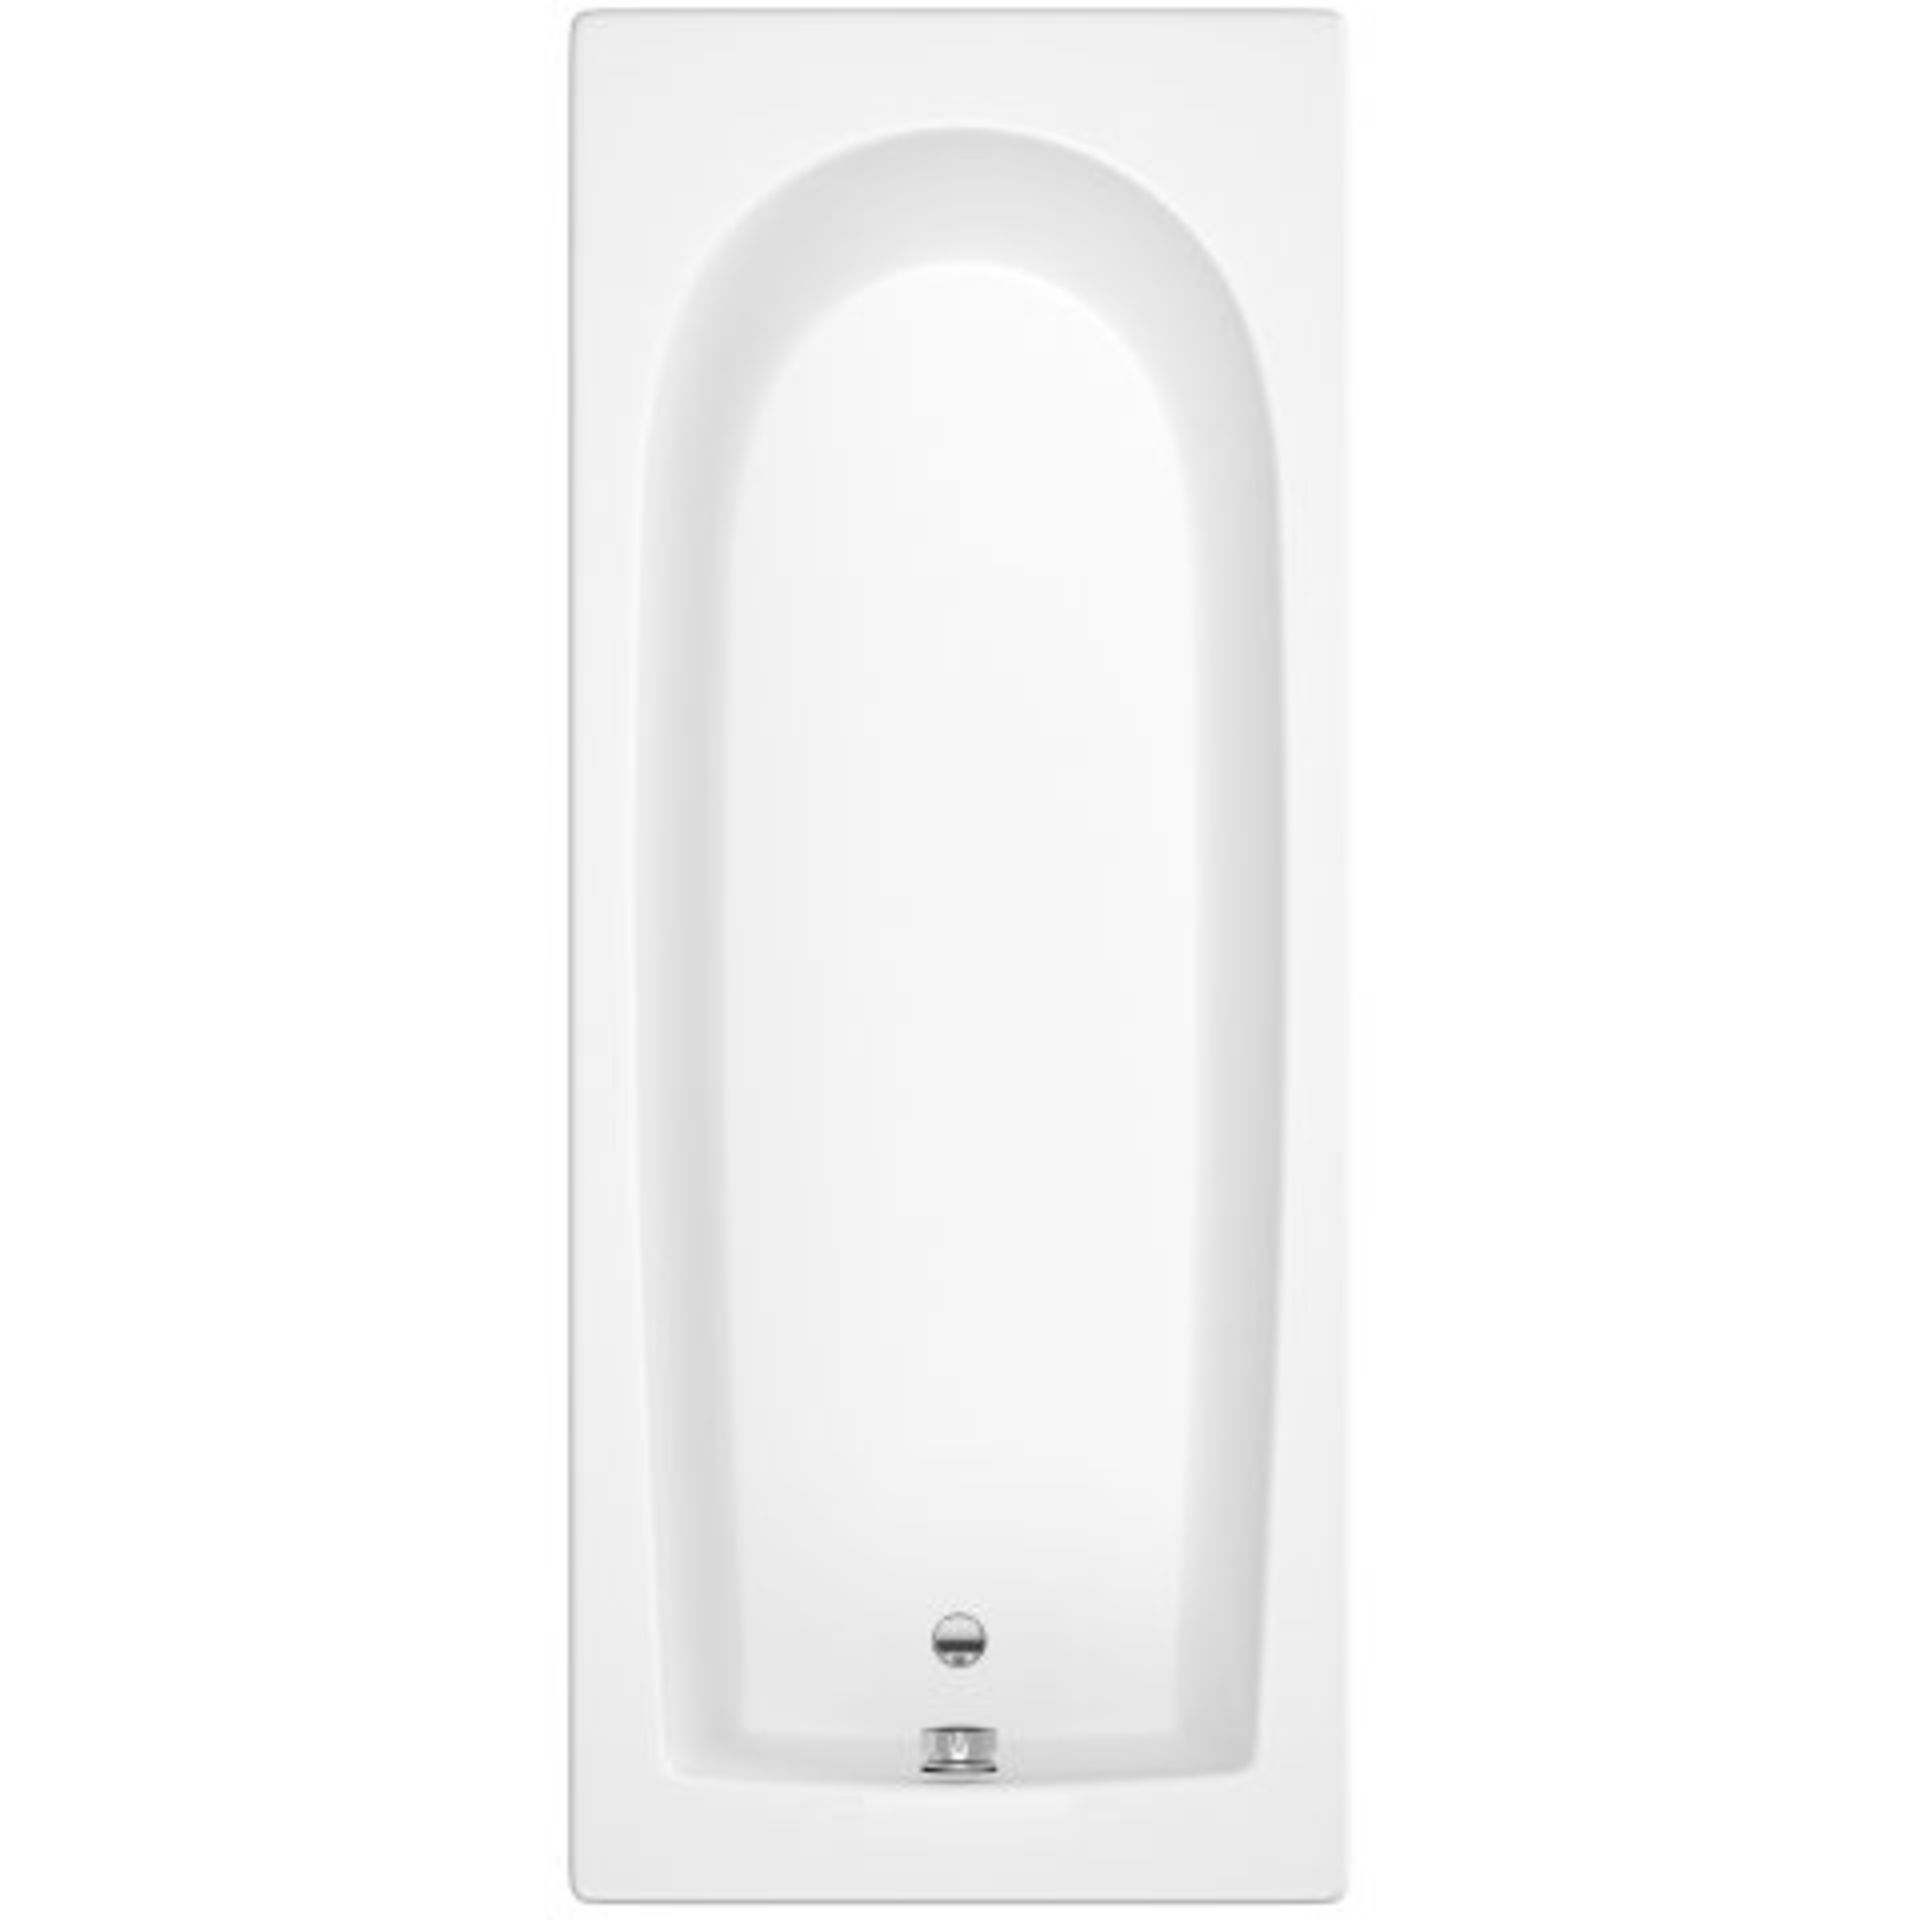 (P97) 1600x700x550mm Round Single Ended Bath. RRP £299.99. This brilliant white straight bath